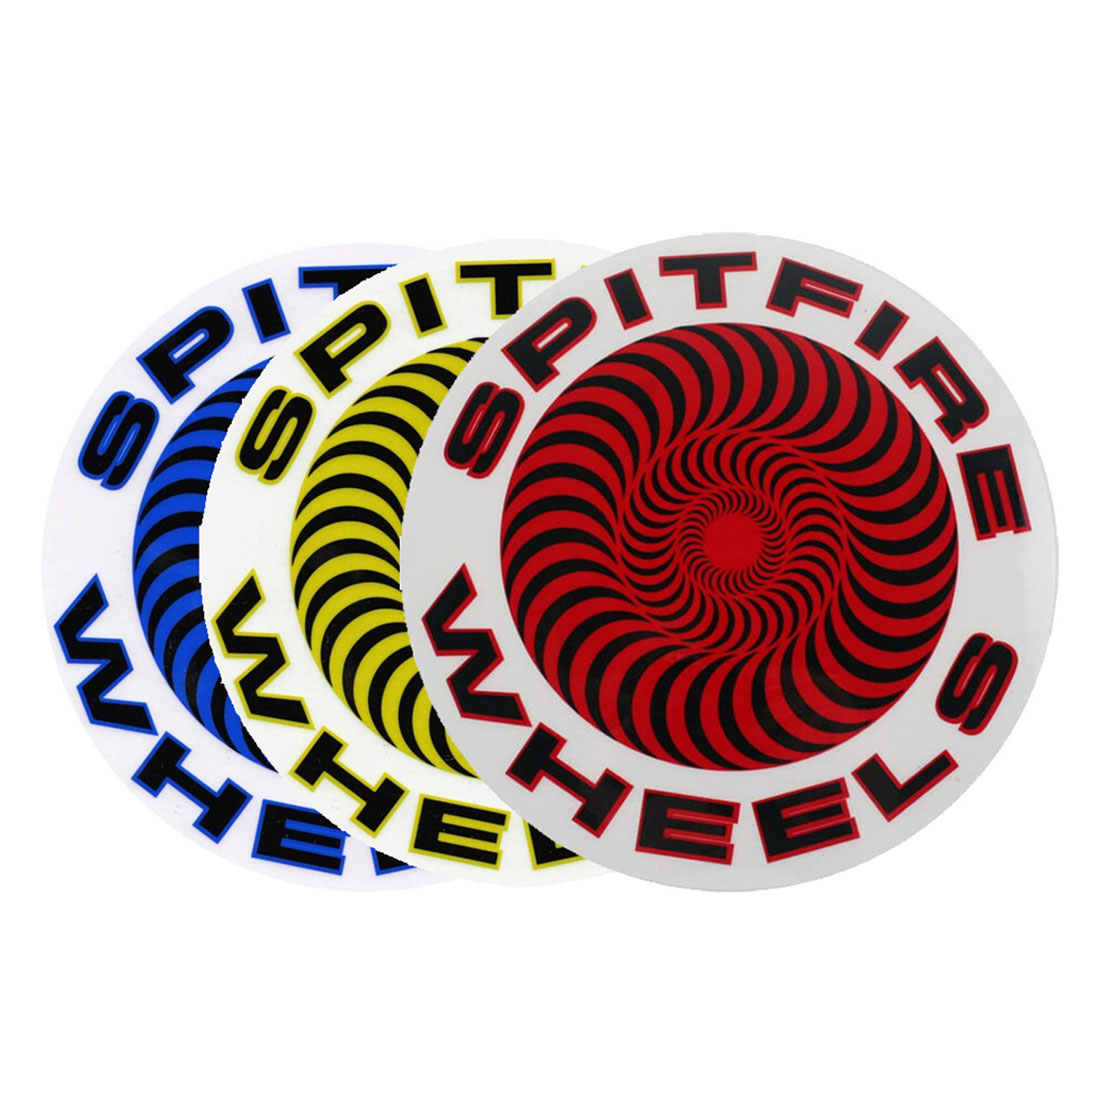 Spitfire Classic Swirl Sticker - Assorted Stickers